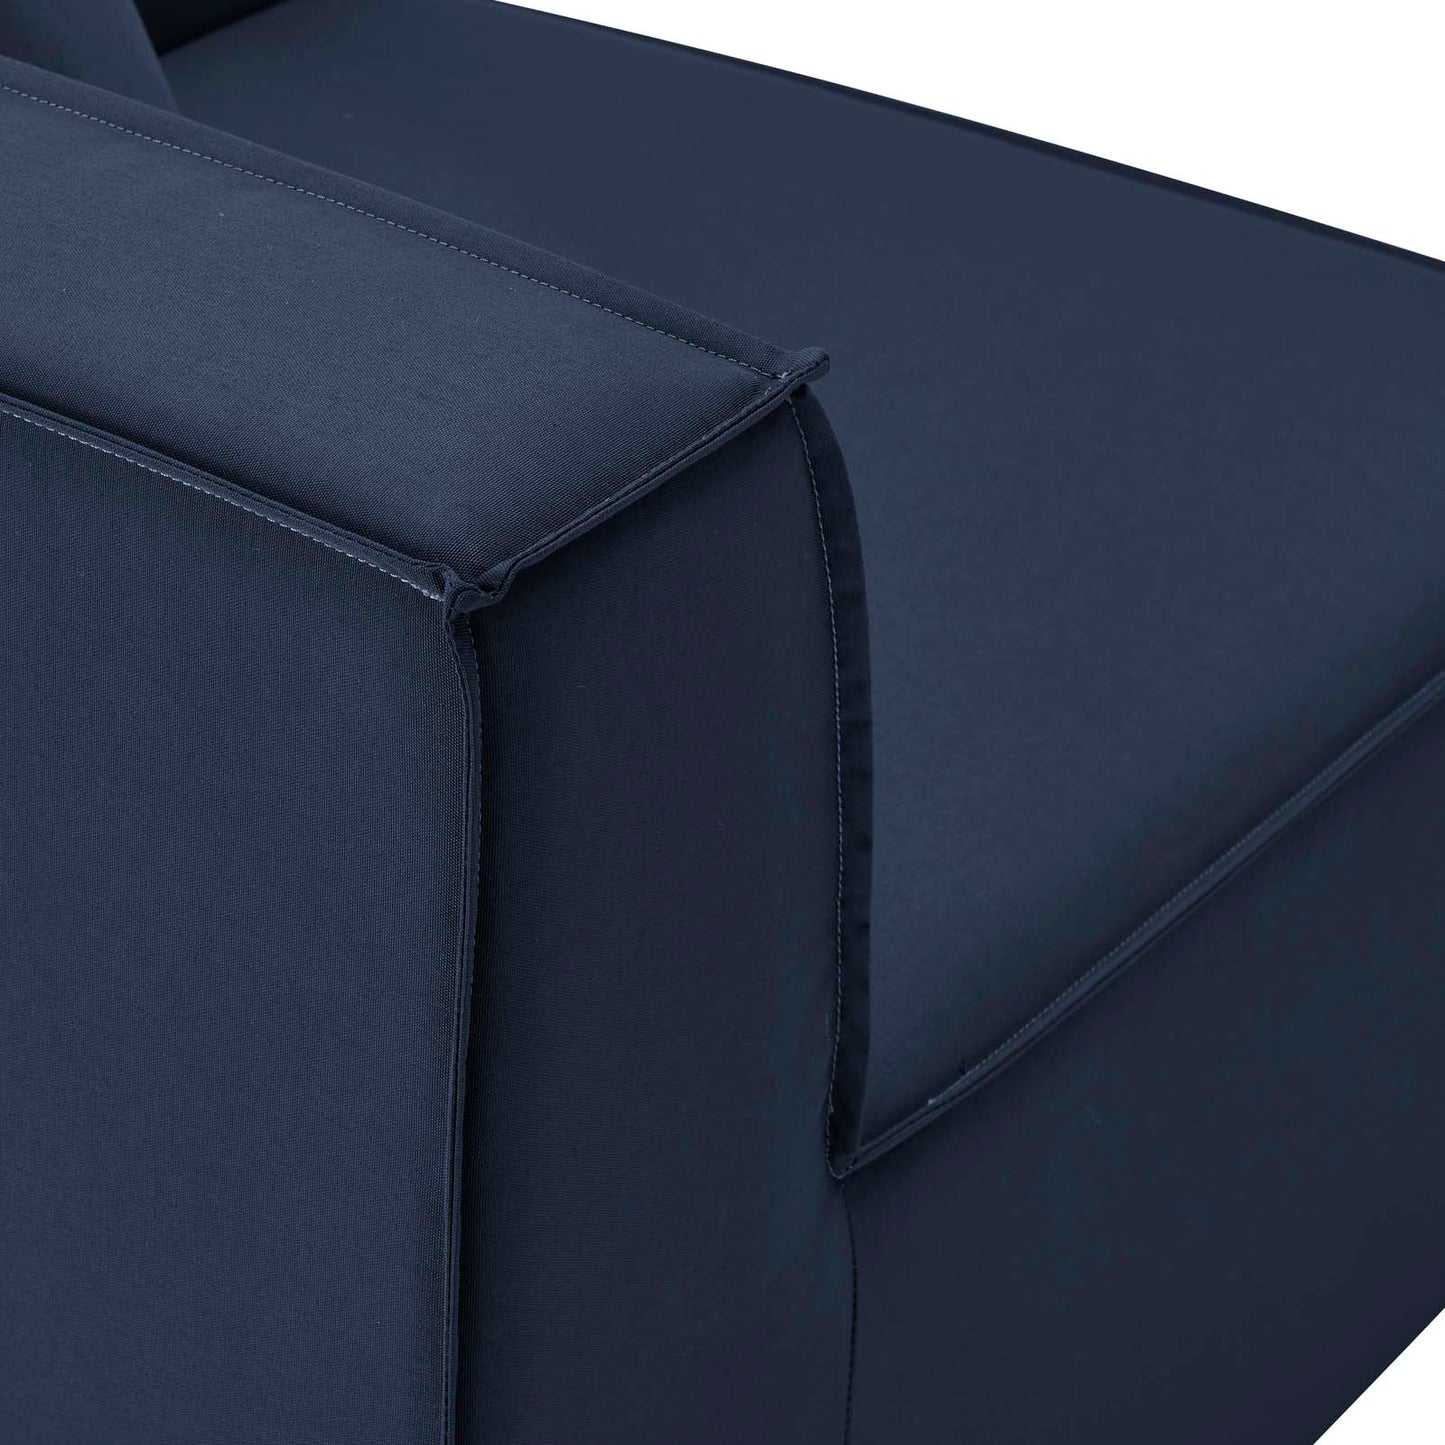 Saybrook Outdoor Patio Upholstered 6-Piece Sectional Sofa Navy EEI-4385-NAV